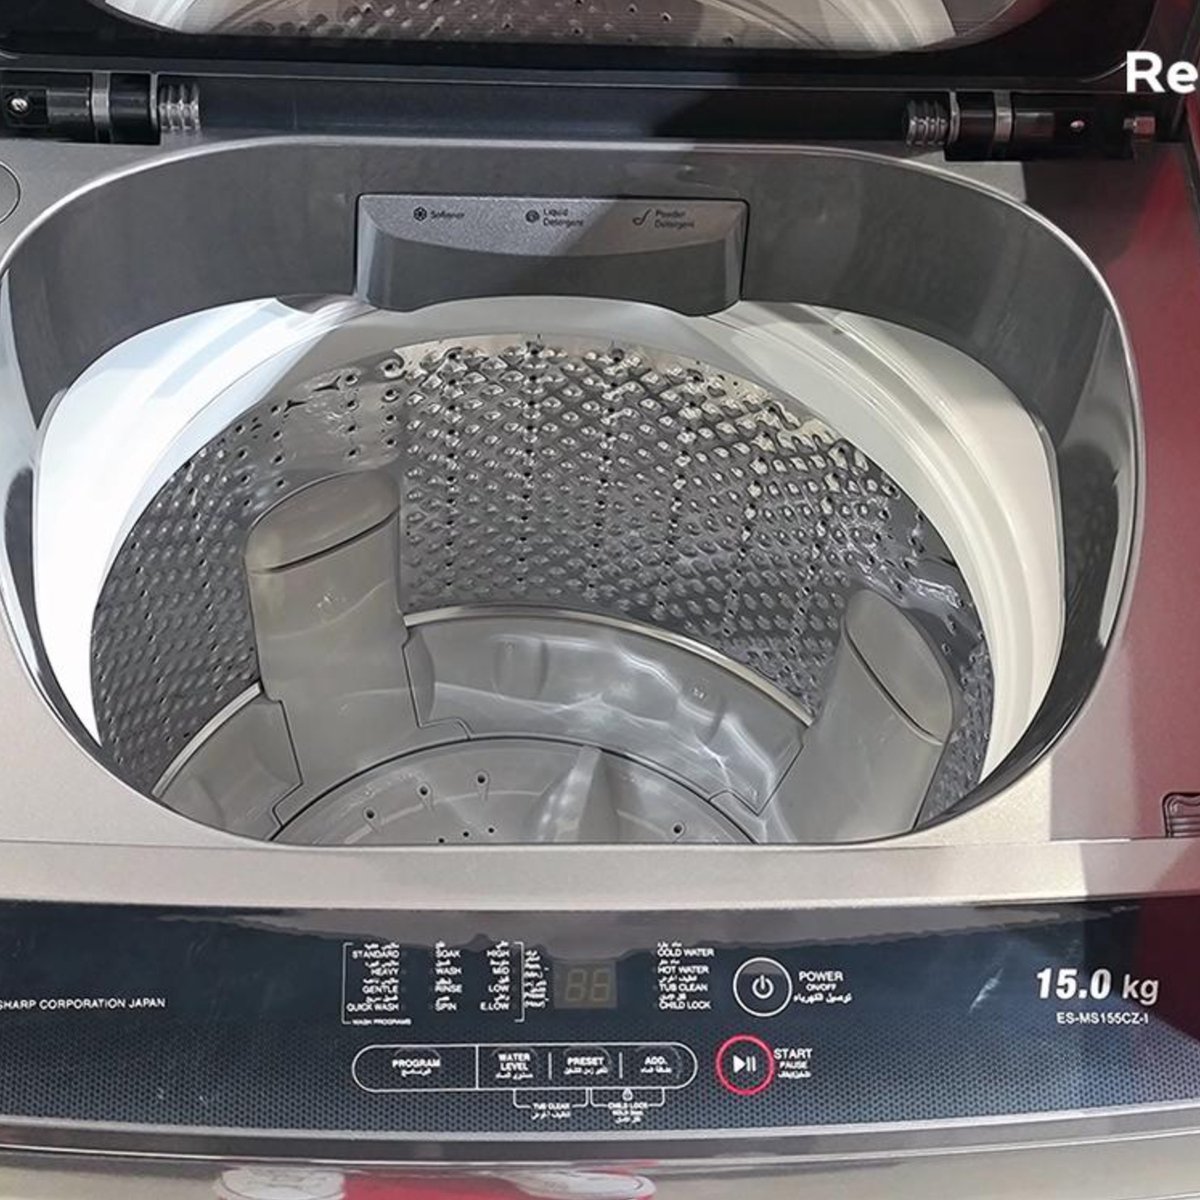 Sharp Top Load Washing Machine ESMS155CZI 15KG